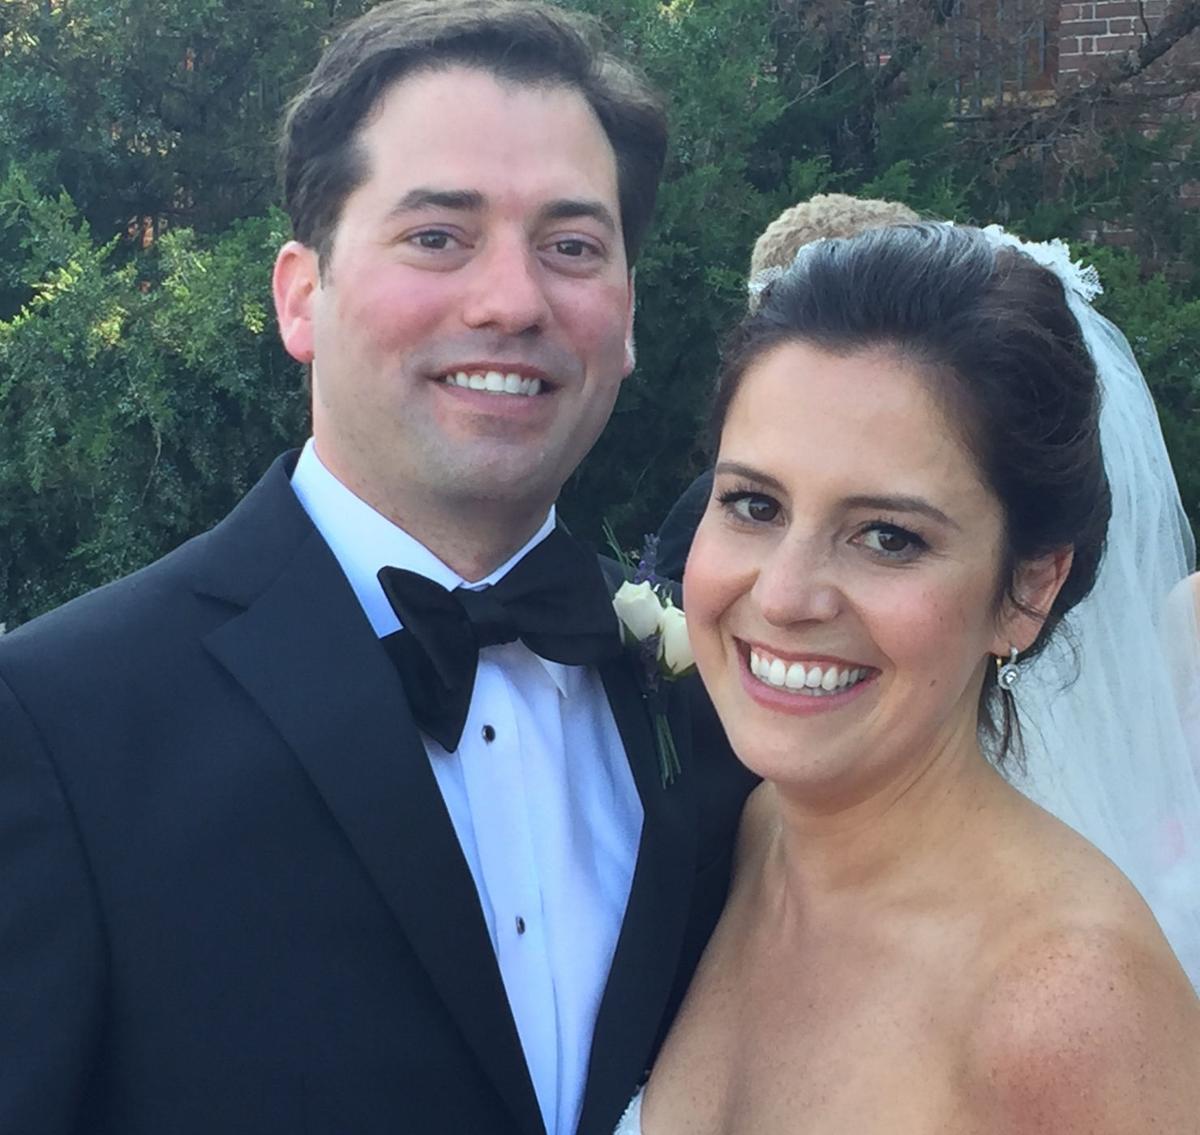 Stefanik marries in Saratoga Springs ceremony | News | nny360.com